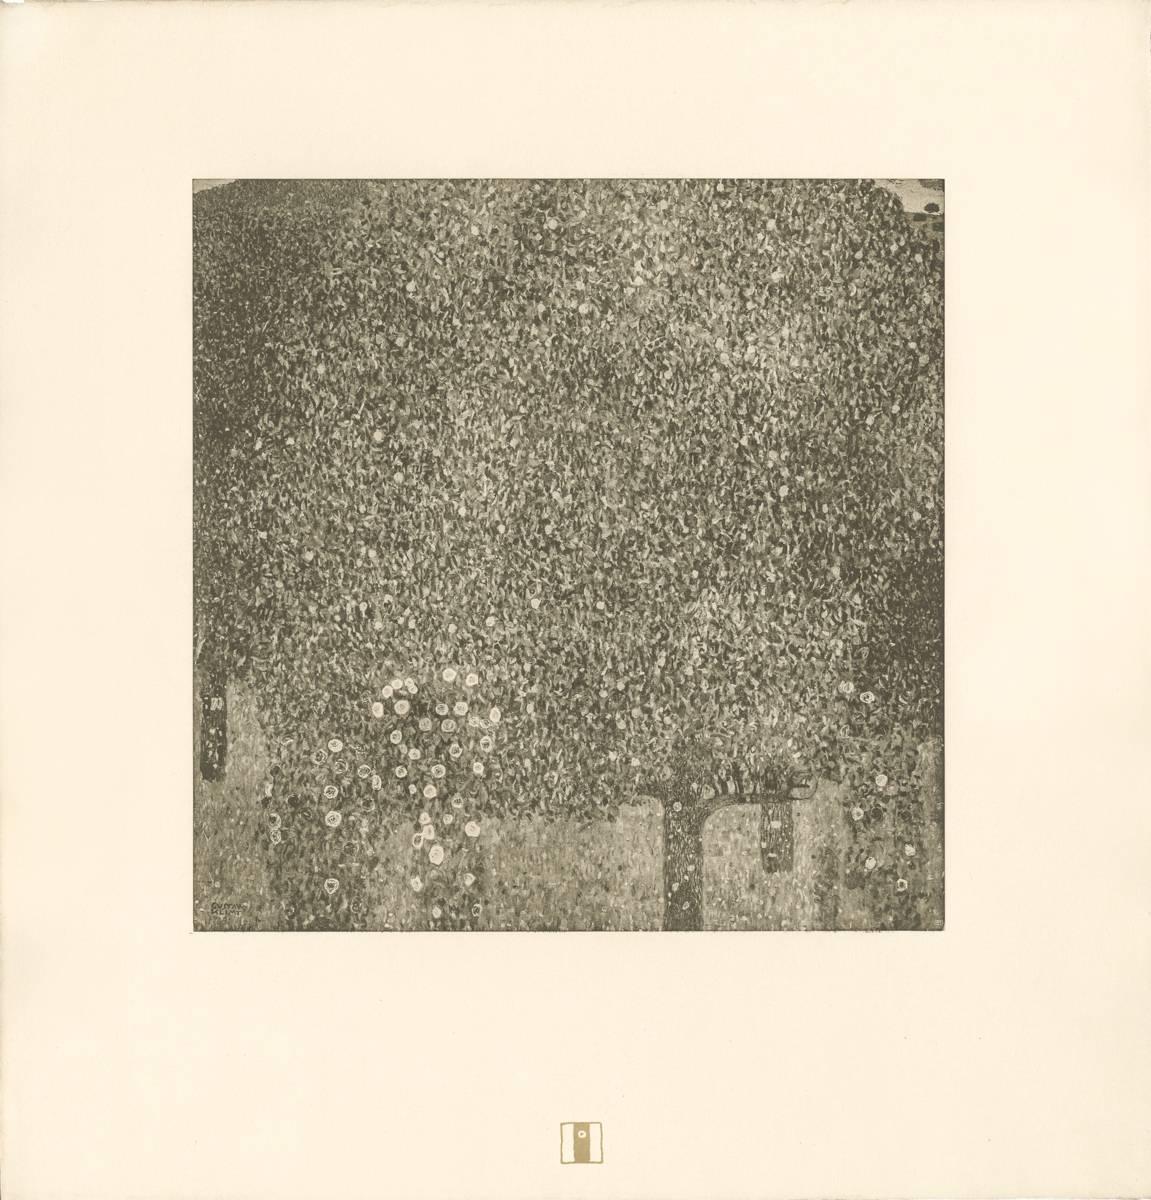 H.O. Miethke Das Werk folio "Rose" collotype print